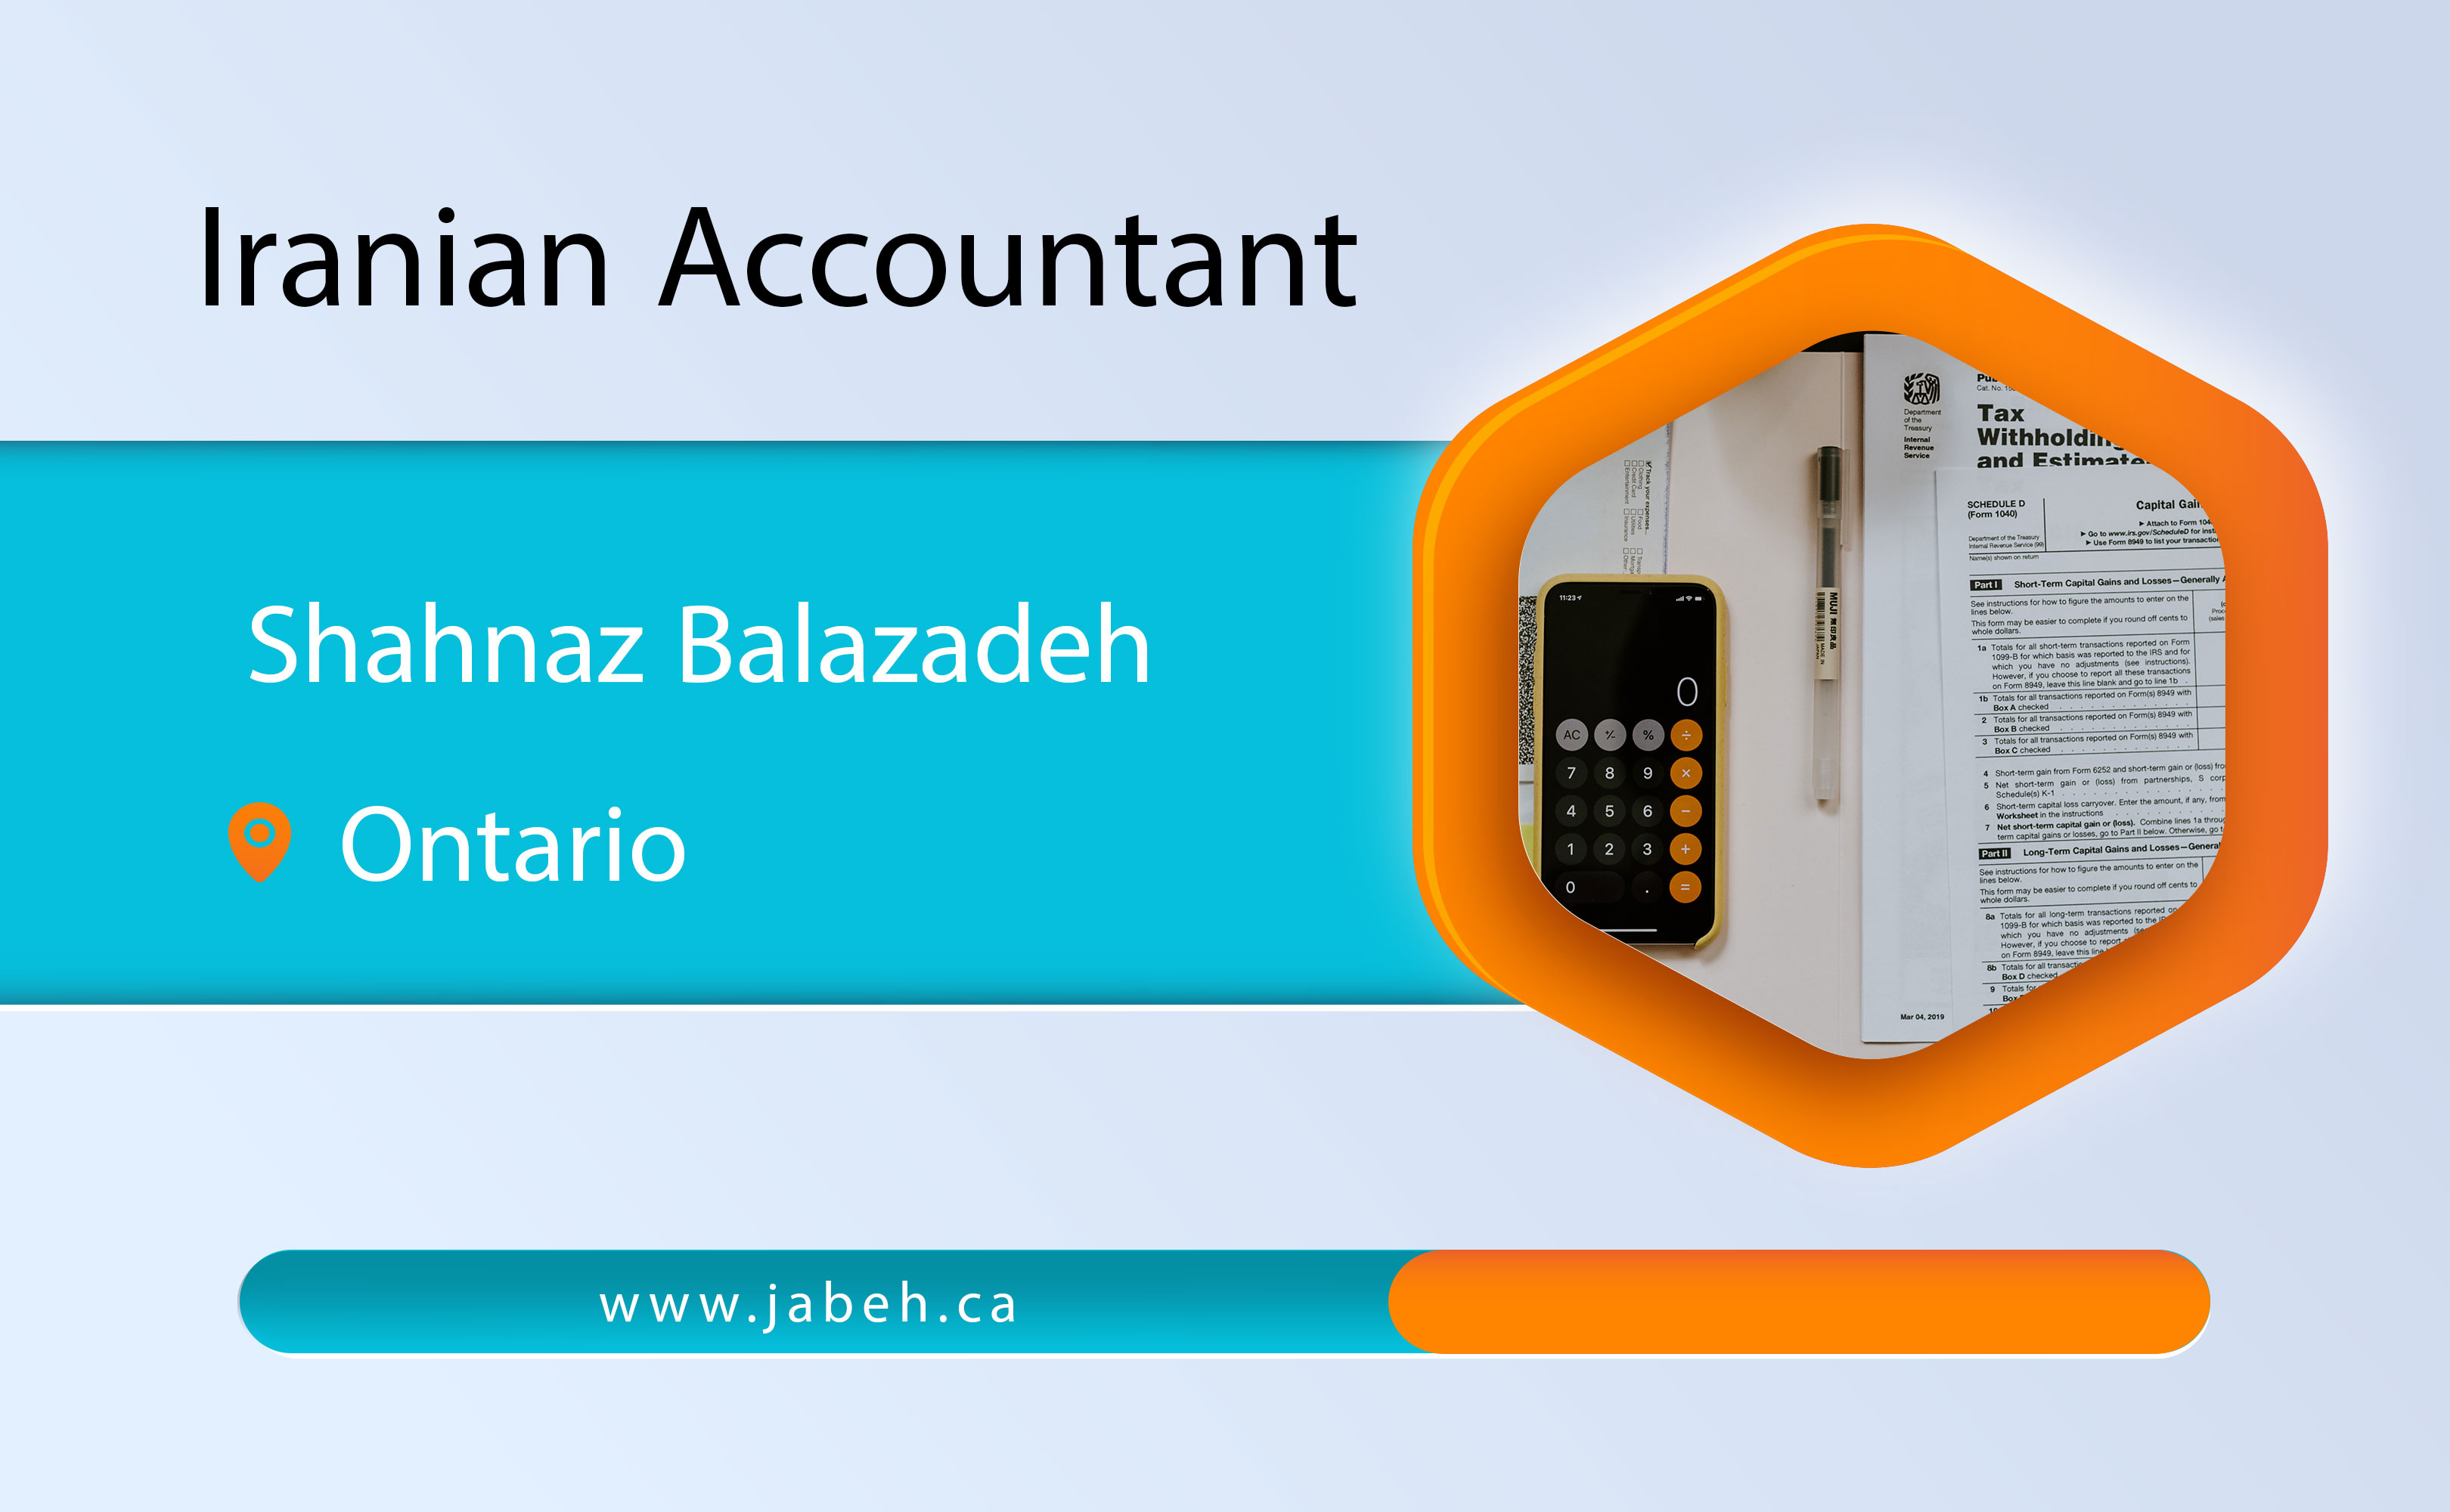 Iranian accountant Shahnaz Balazadeh was born in Ontario